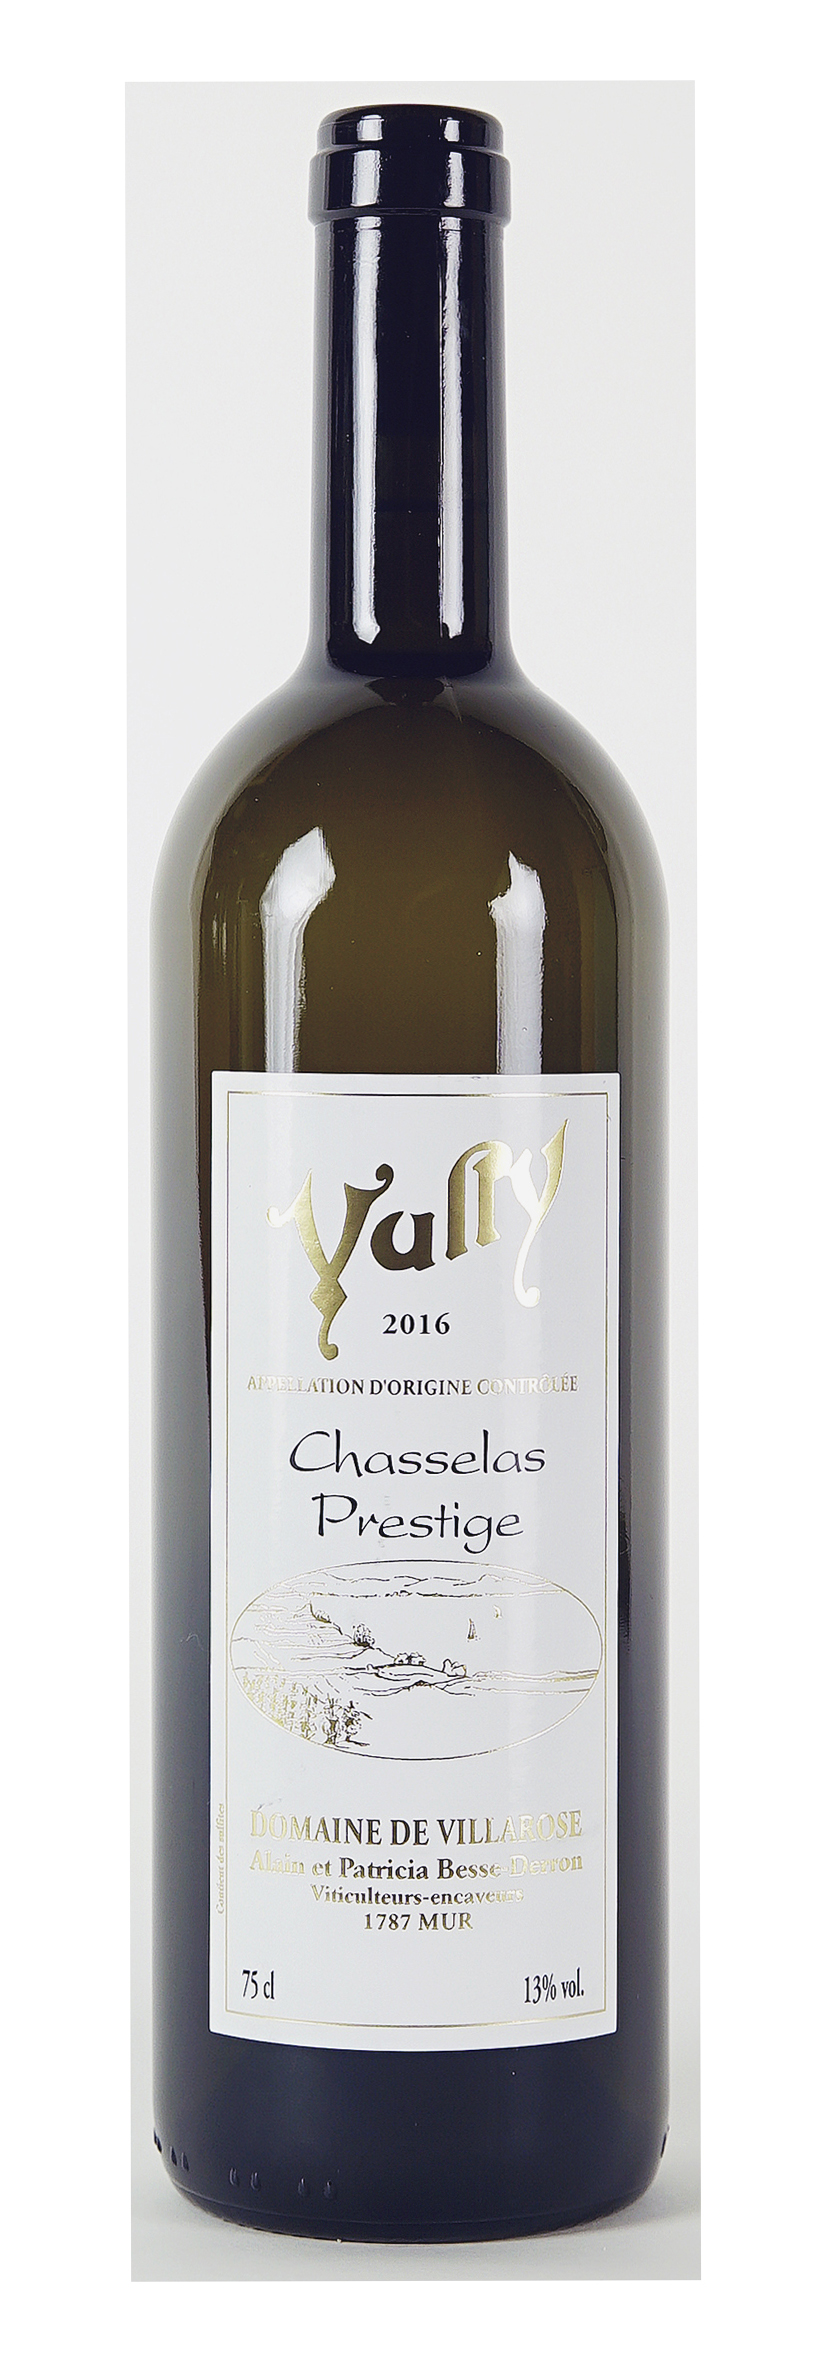 Vully AOC Chasselas Prestige 2016